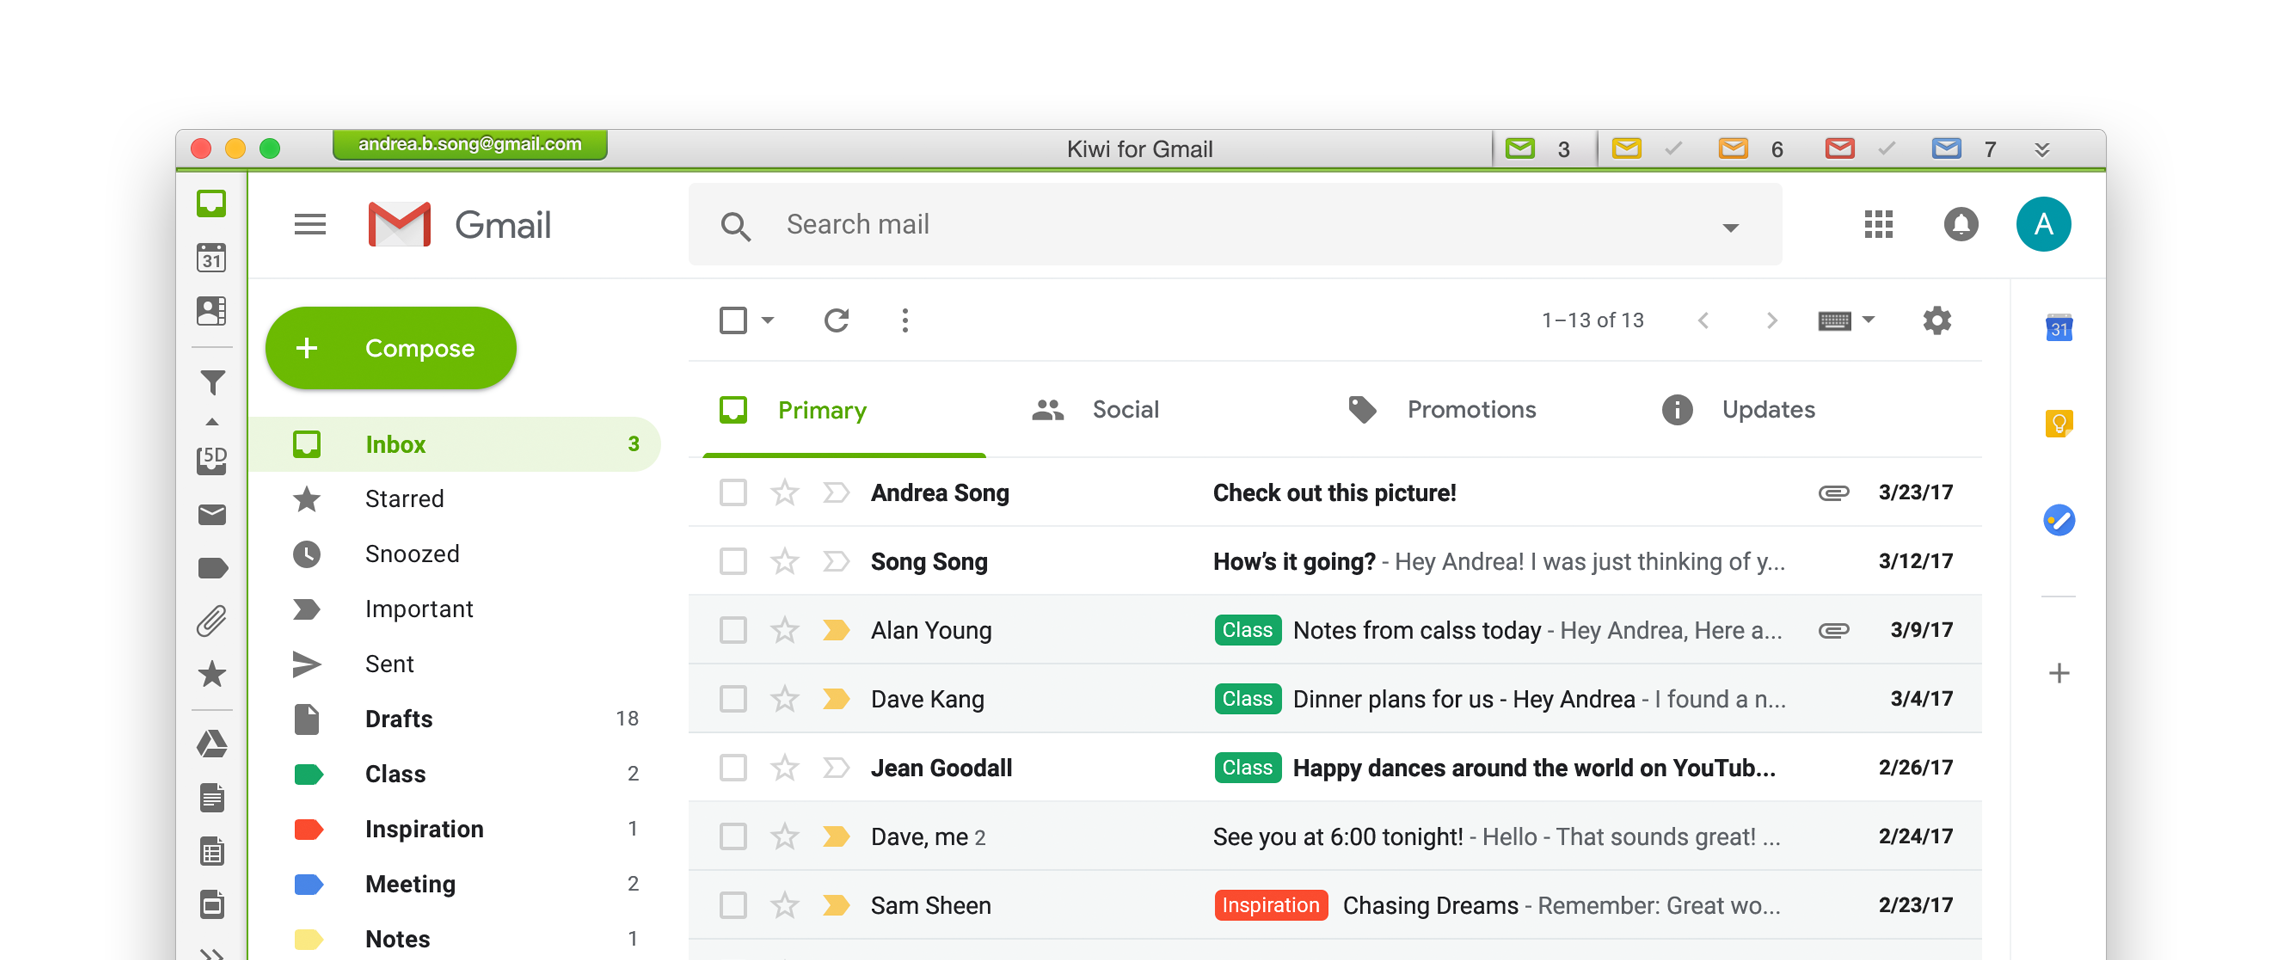 gmail desktop app for windows 10 free download